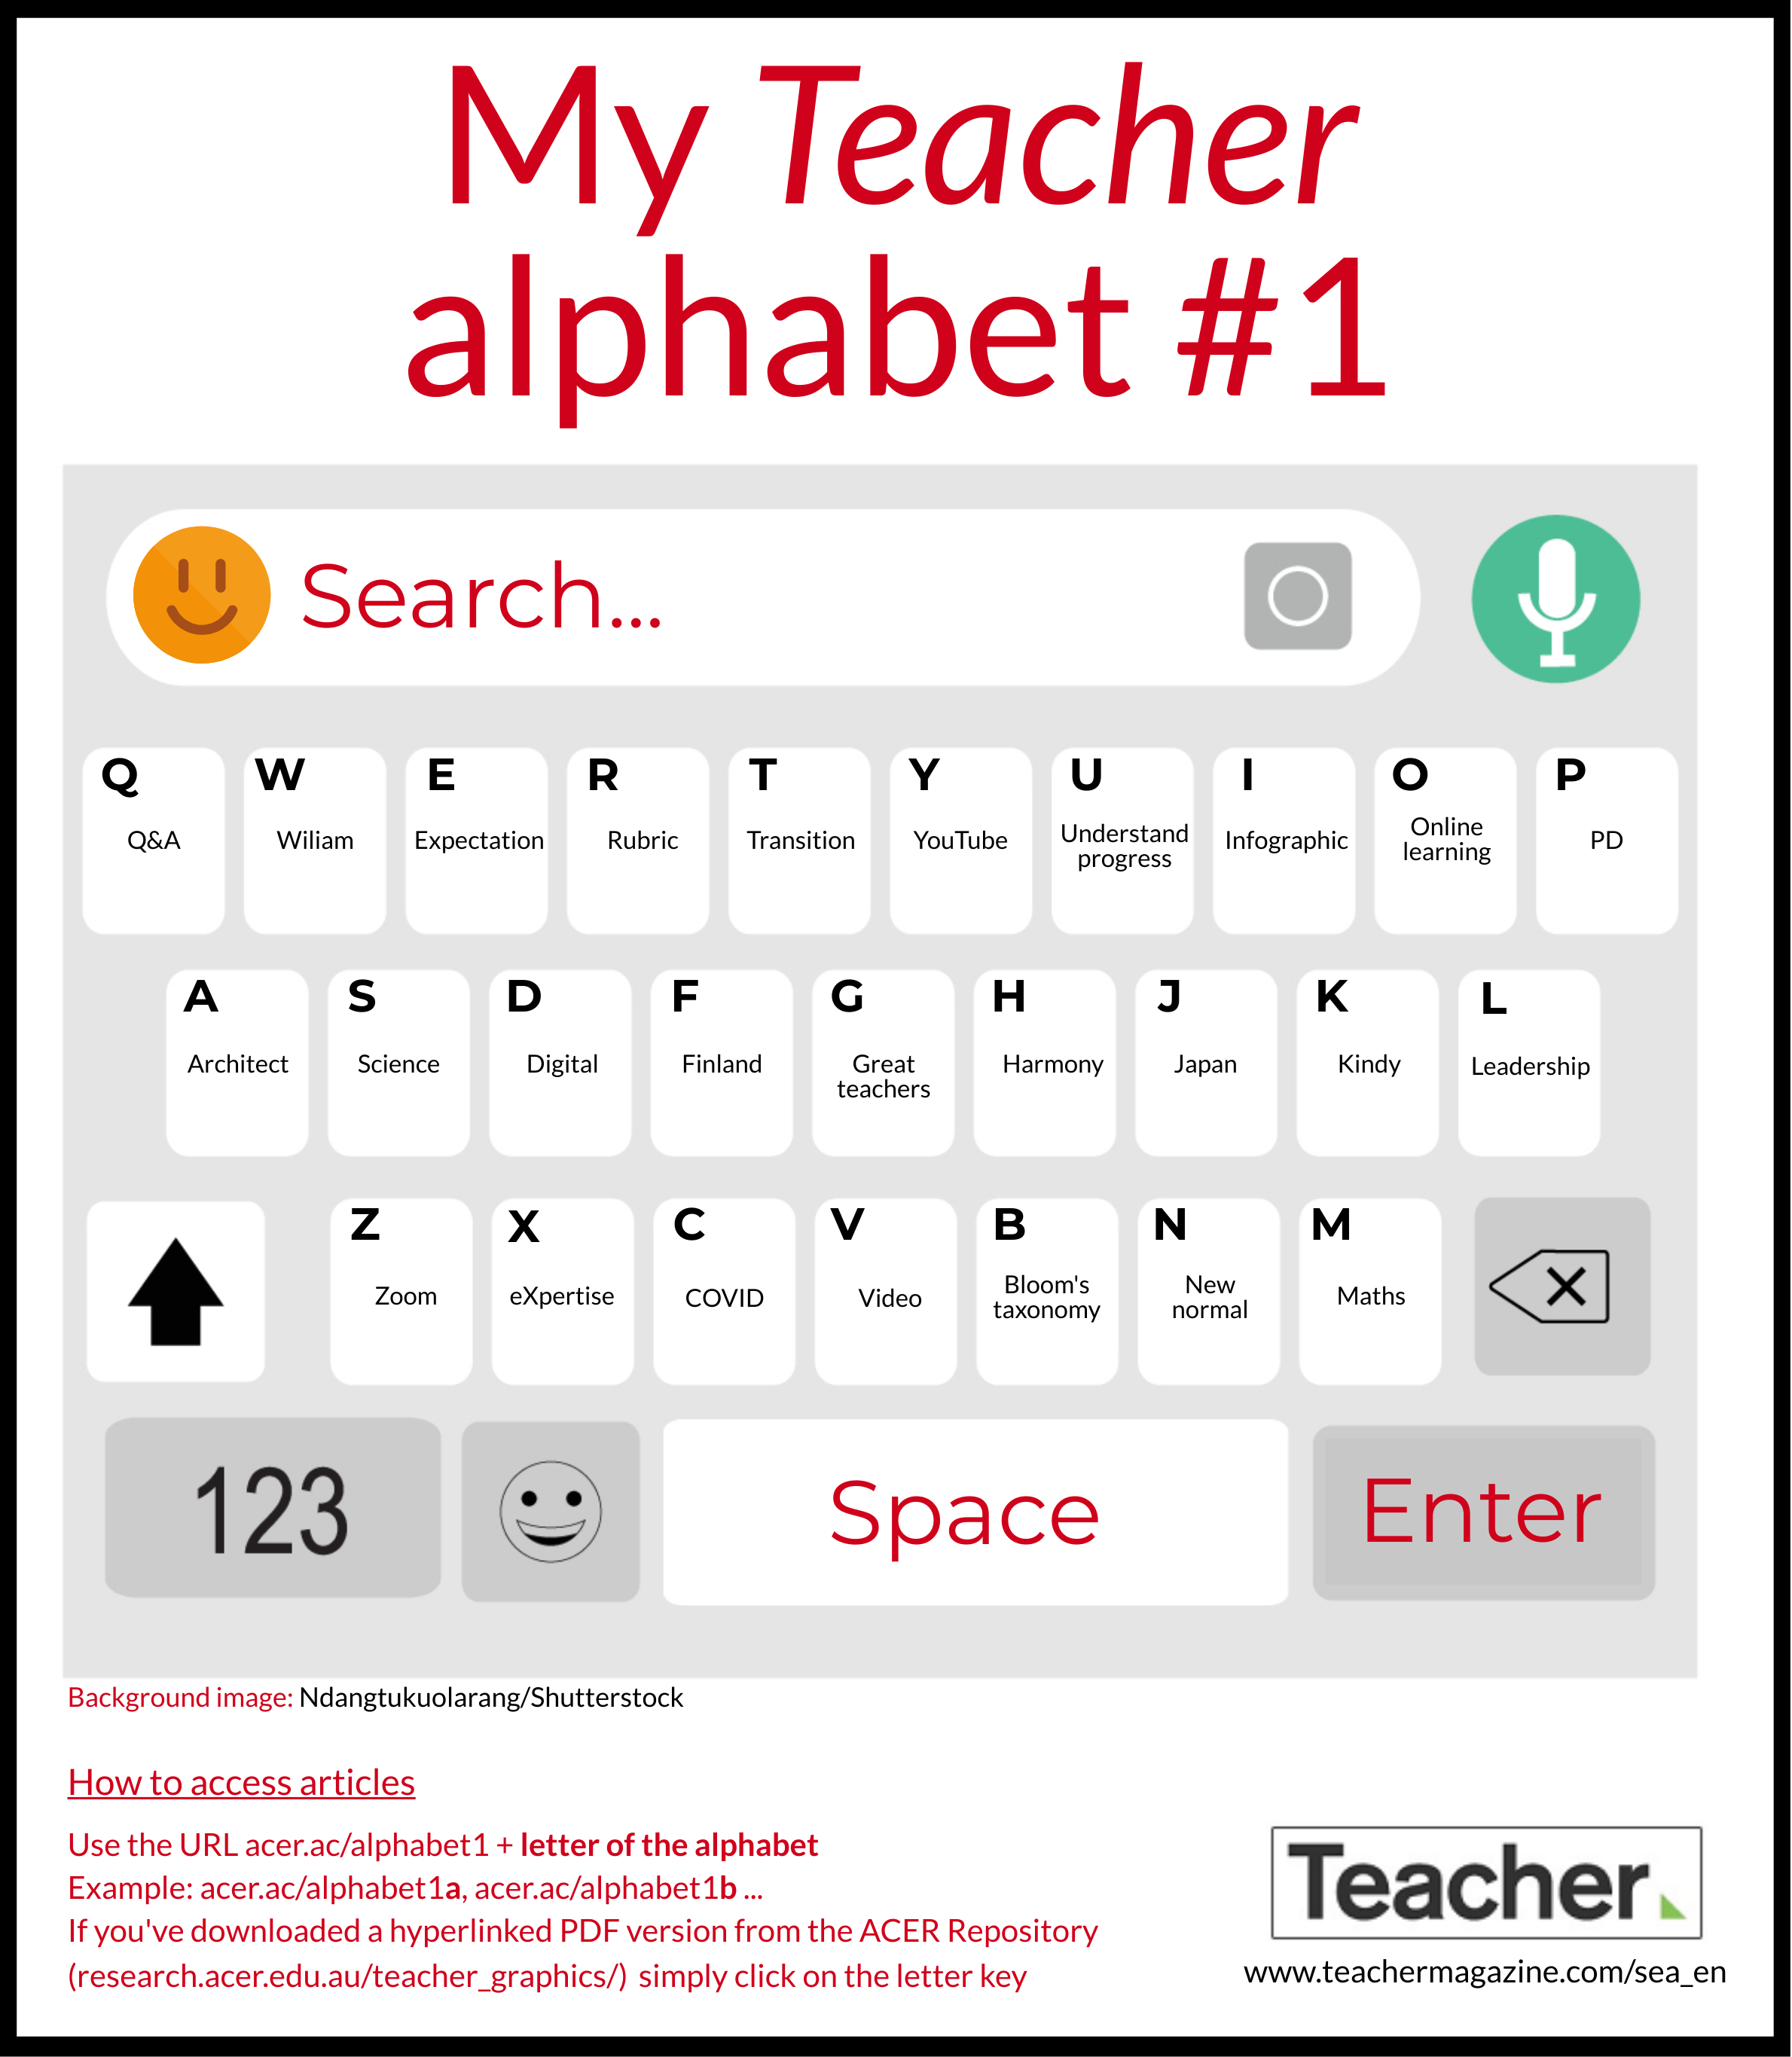 SEA-EN My Teacher alphabet #1